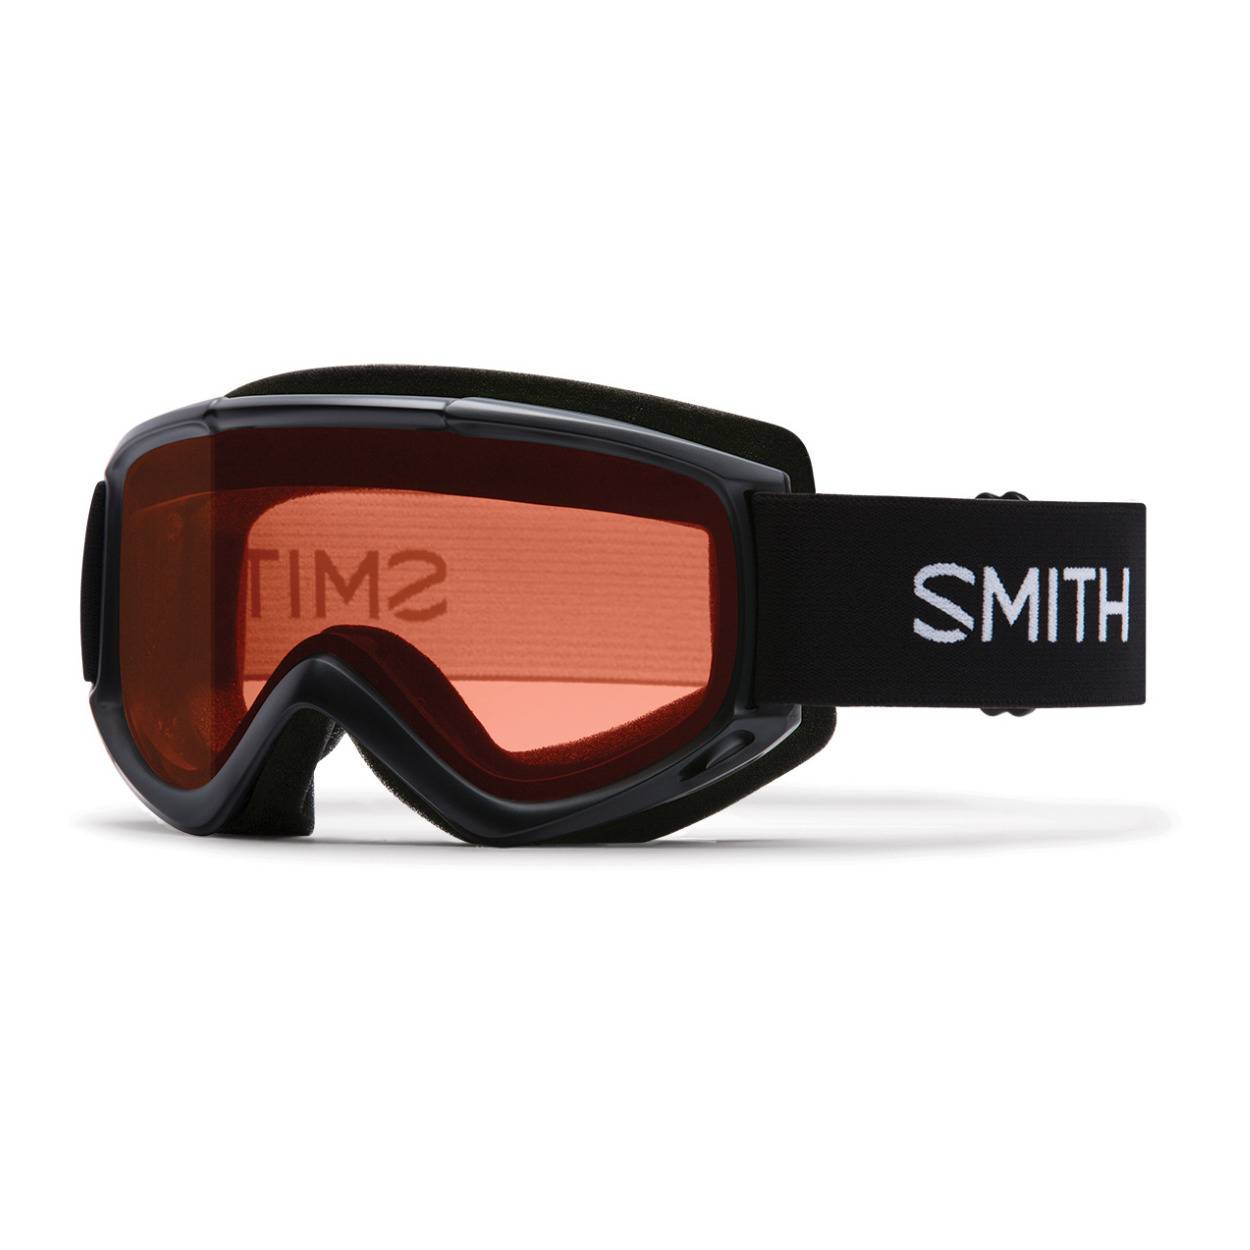 Smith Optics Cascade Classic Snow Goggles (Black, RC36 Red)